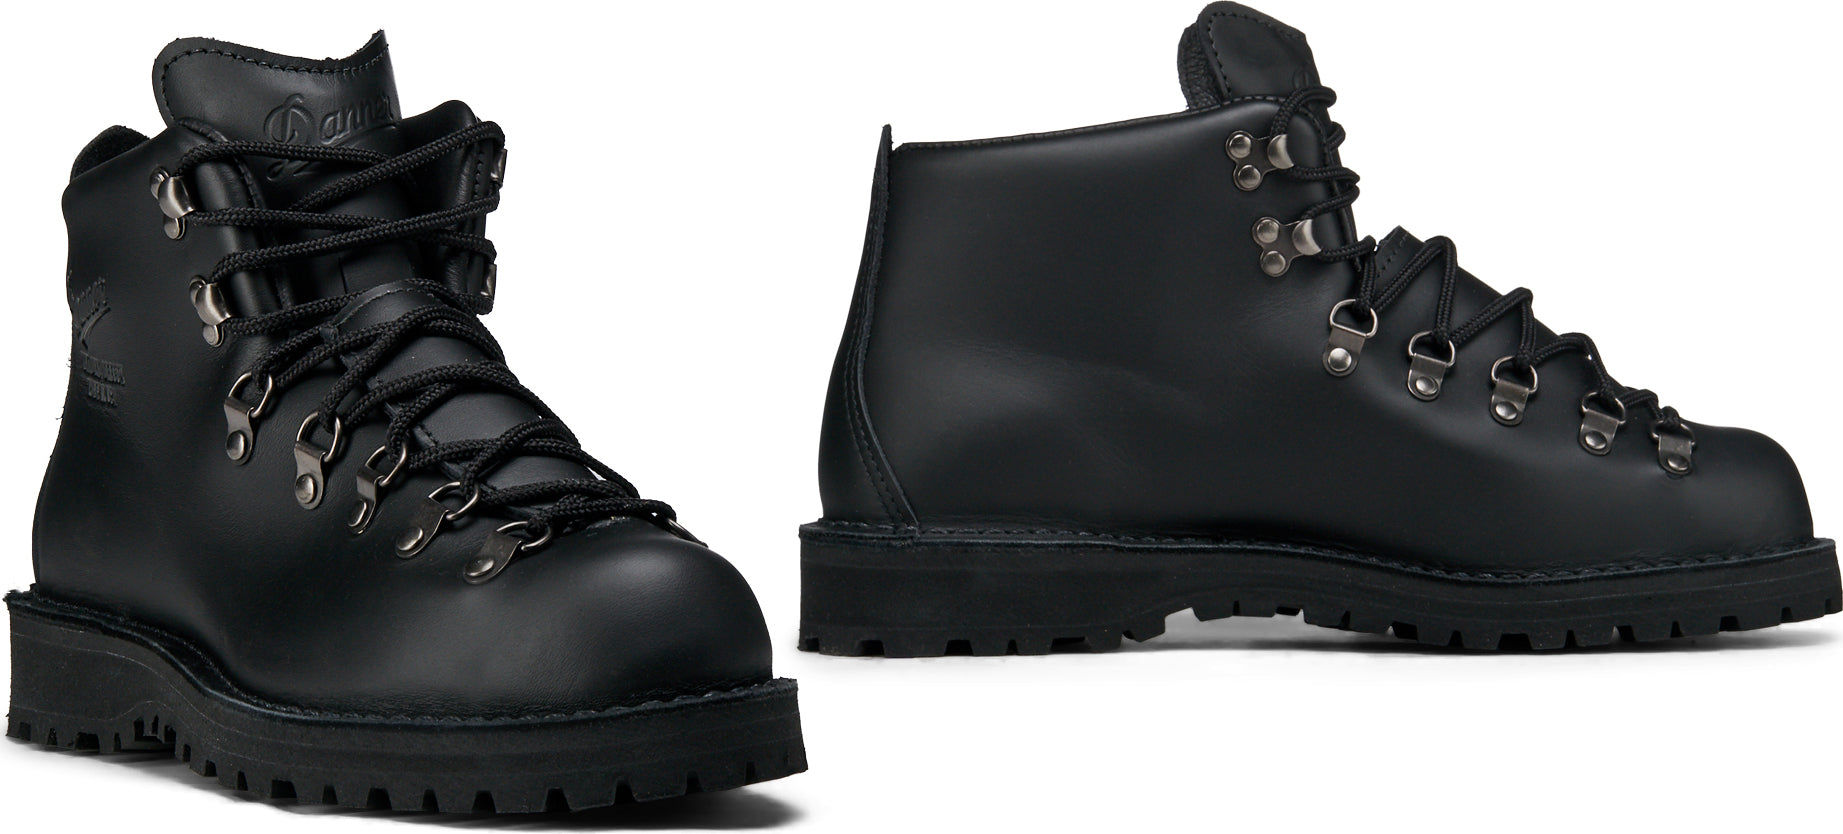 light black boots